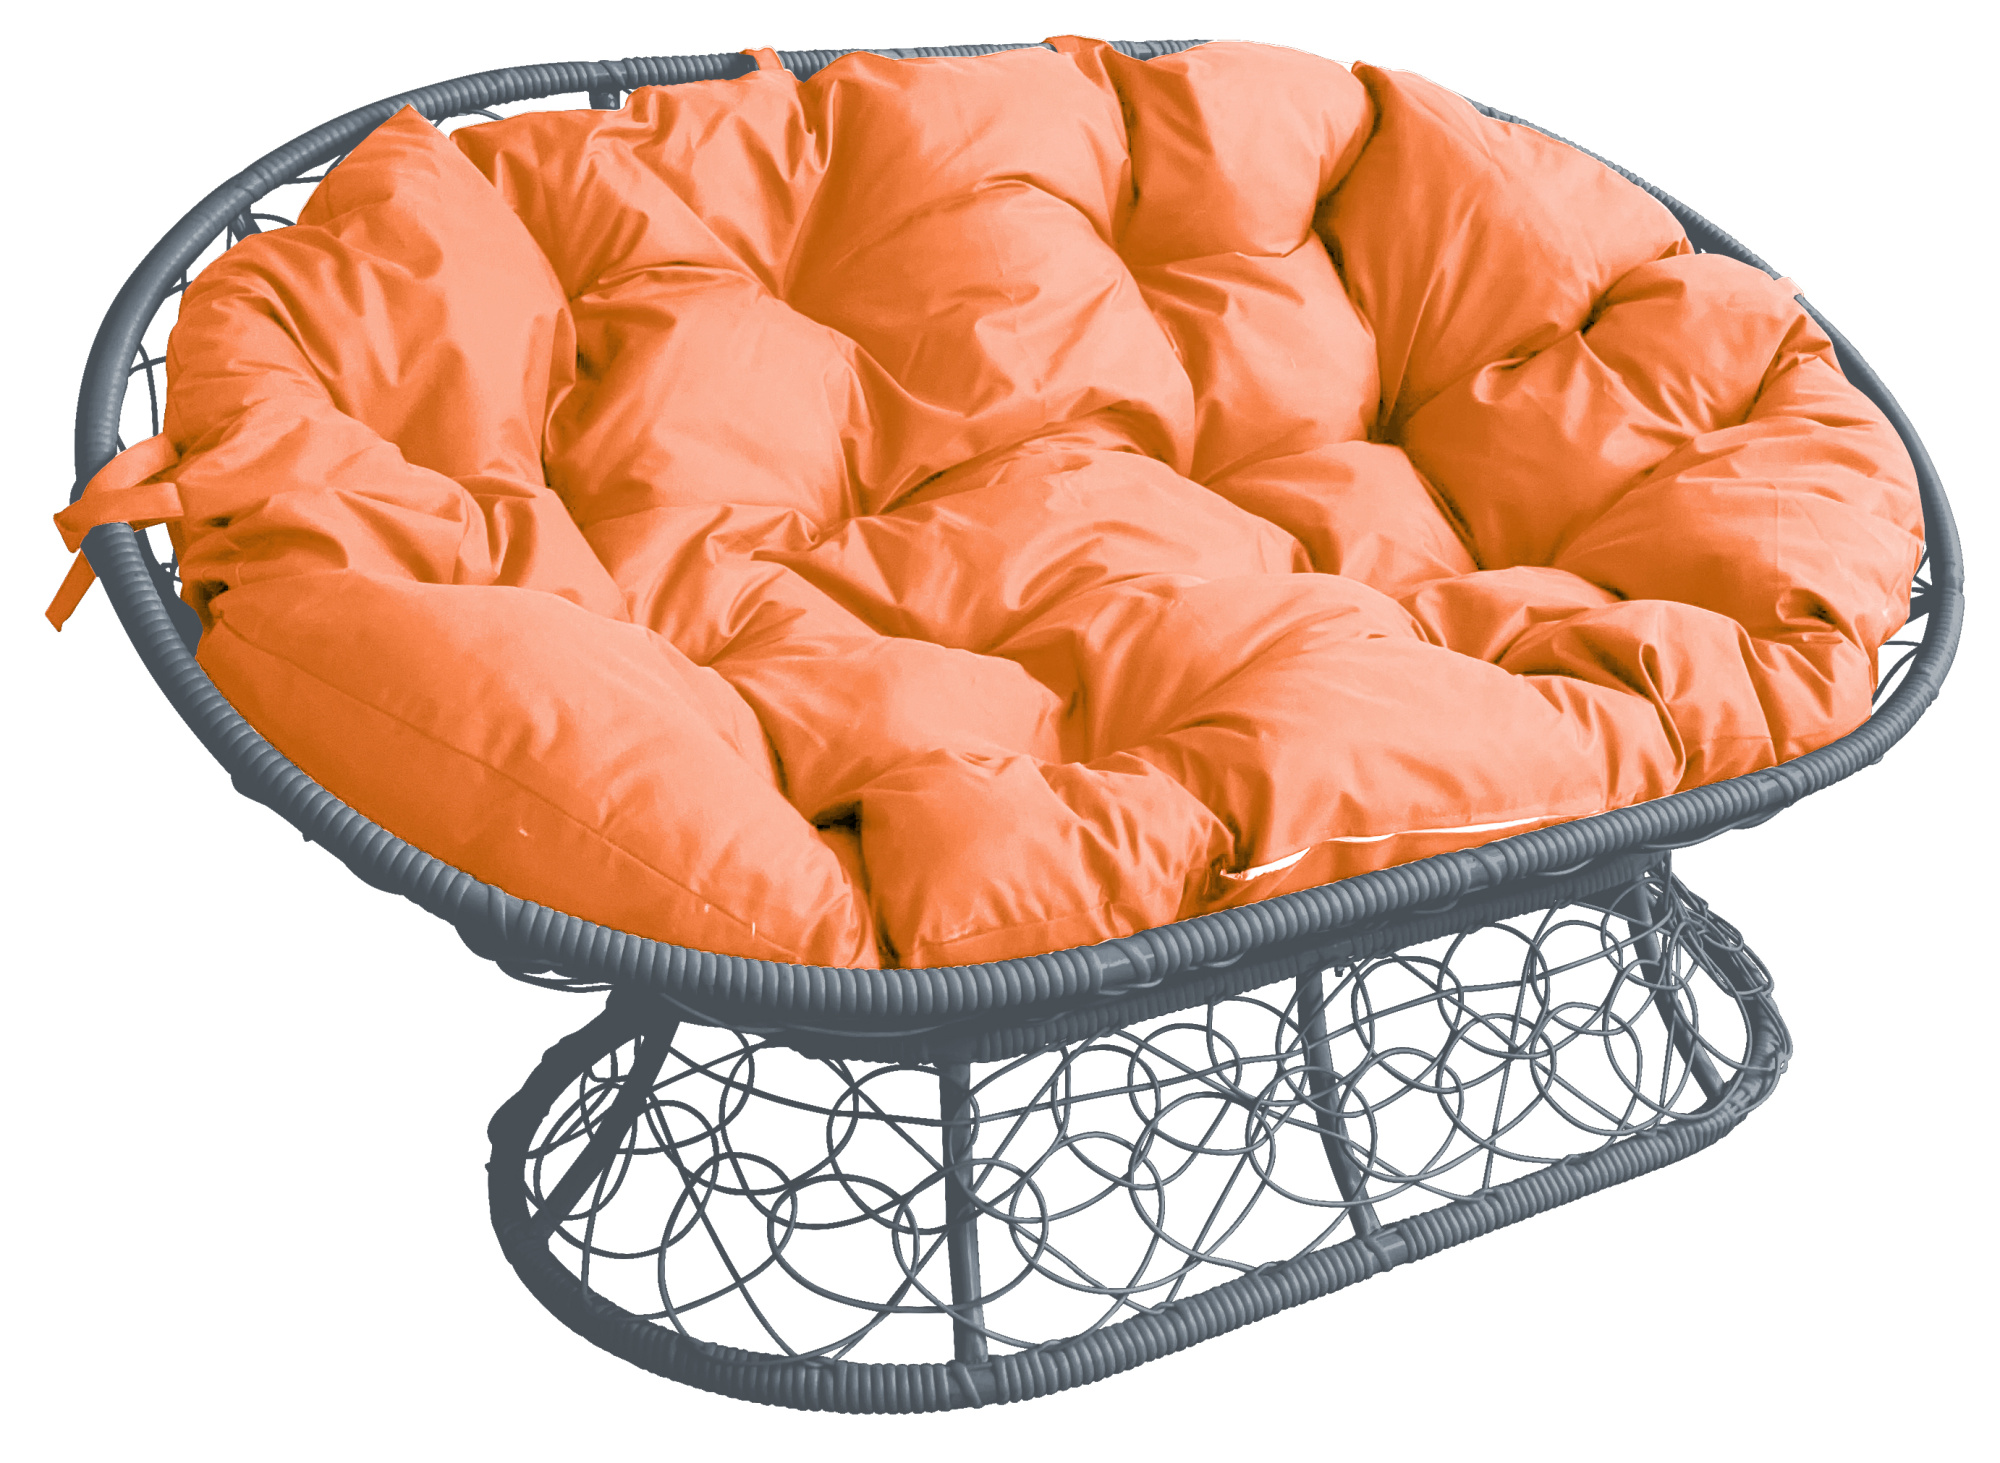 фото Диван садовый m-group мамасан серый ротанг 12110307 оранжевая подушка